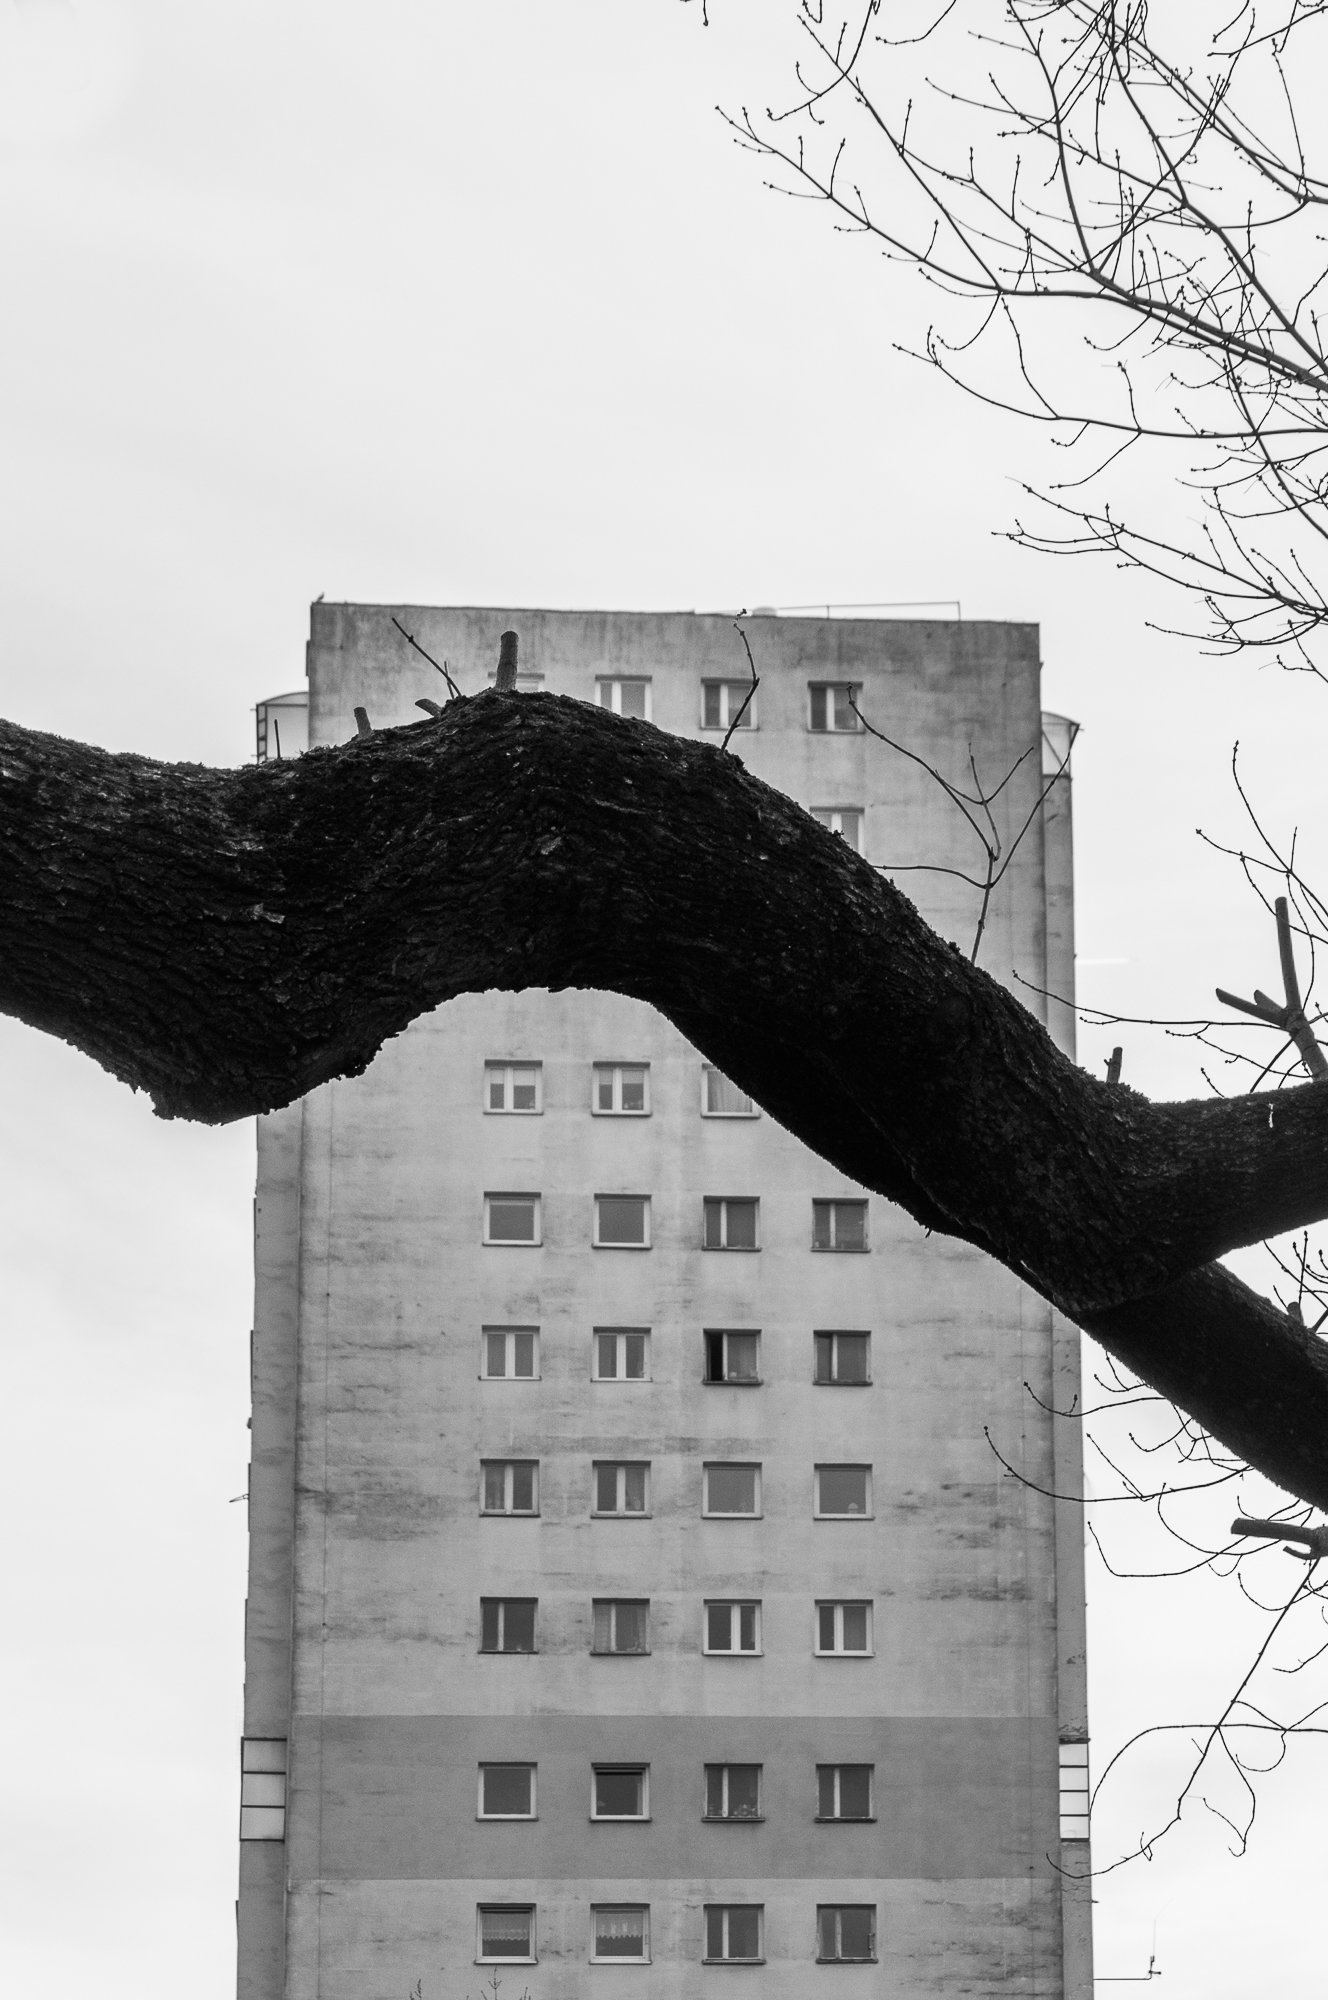 Adam Mazek Photography Warsaw (Warszawa) 2020. Post: "Overloaded by information." Minimalism, part 31. Tree. Blocks of flats.